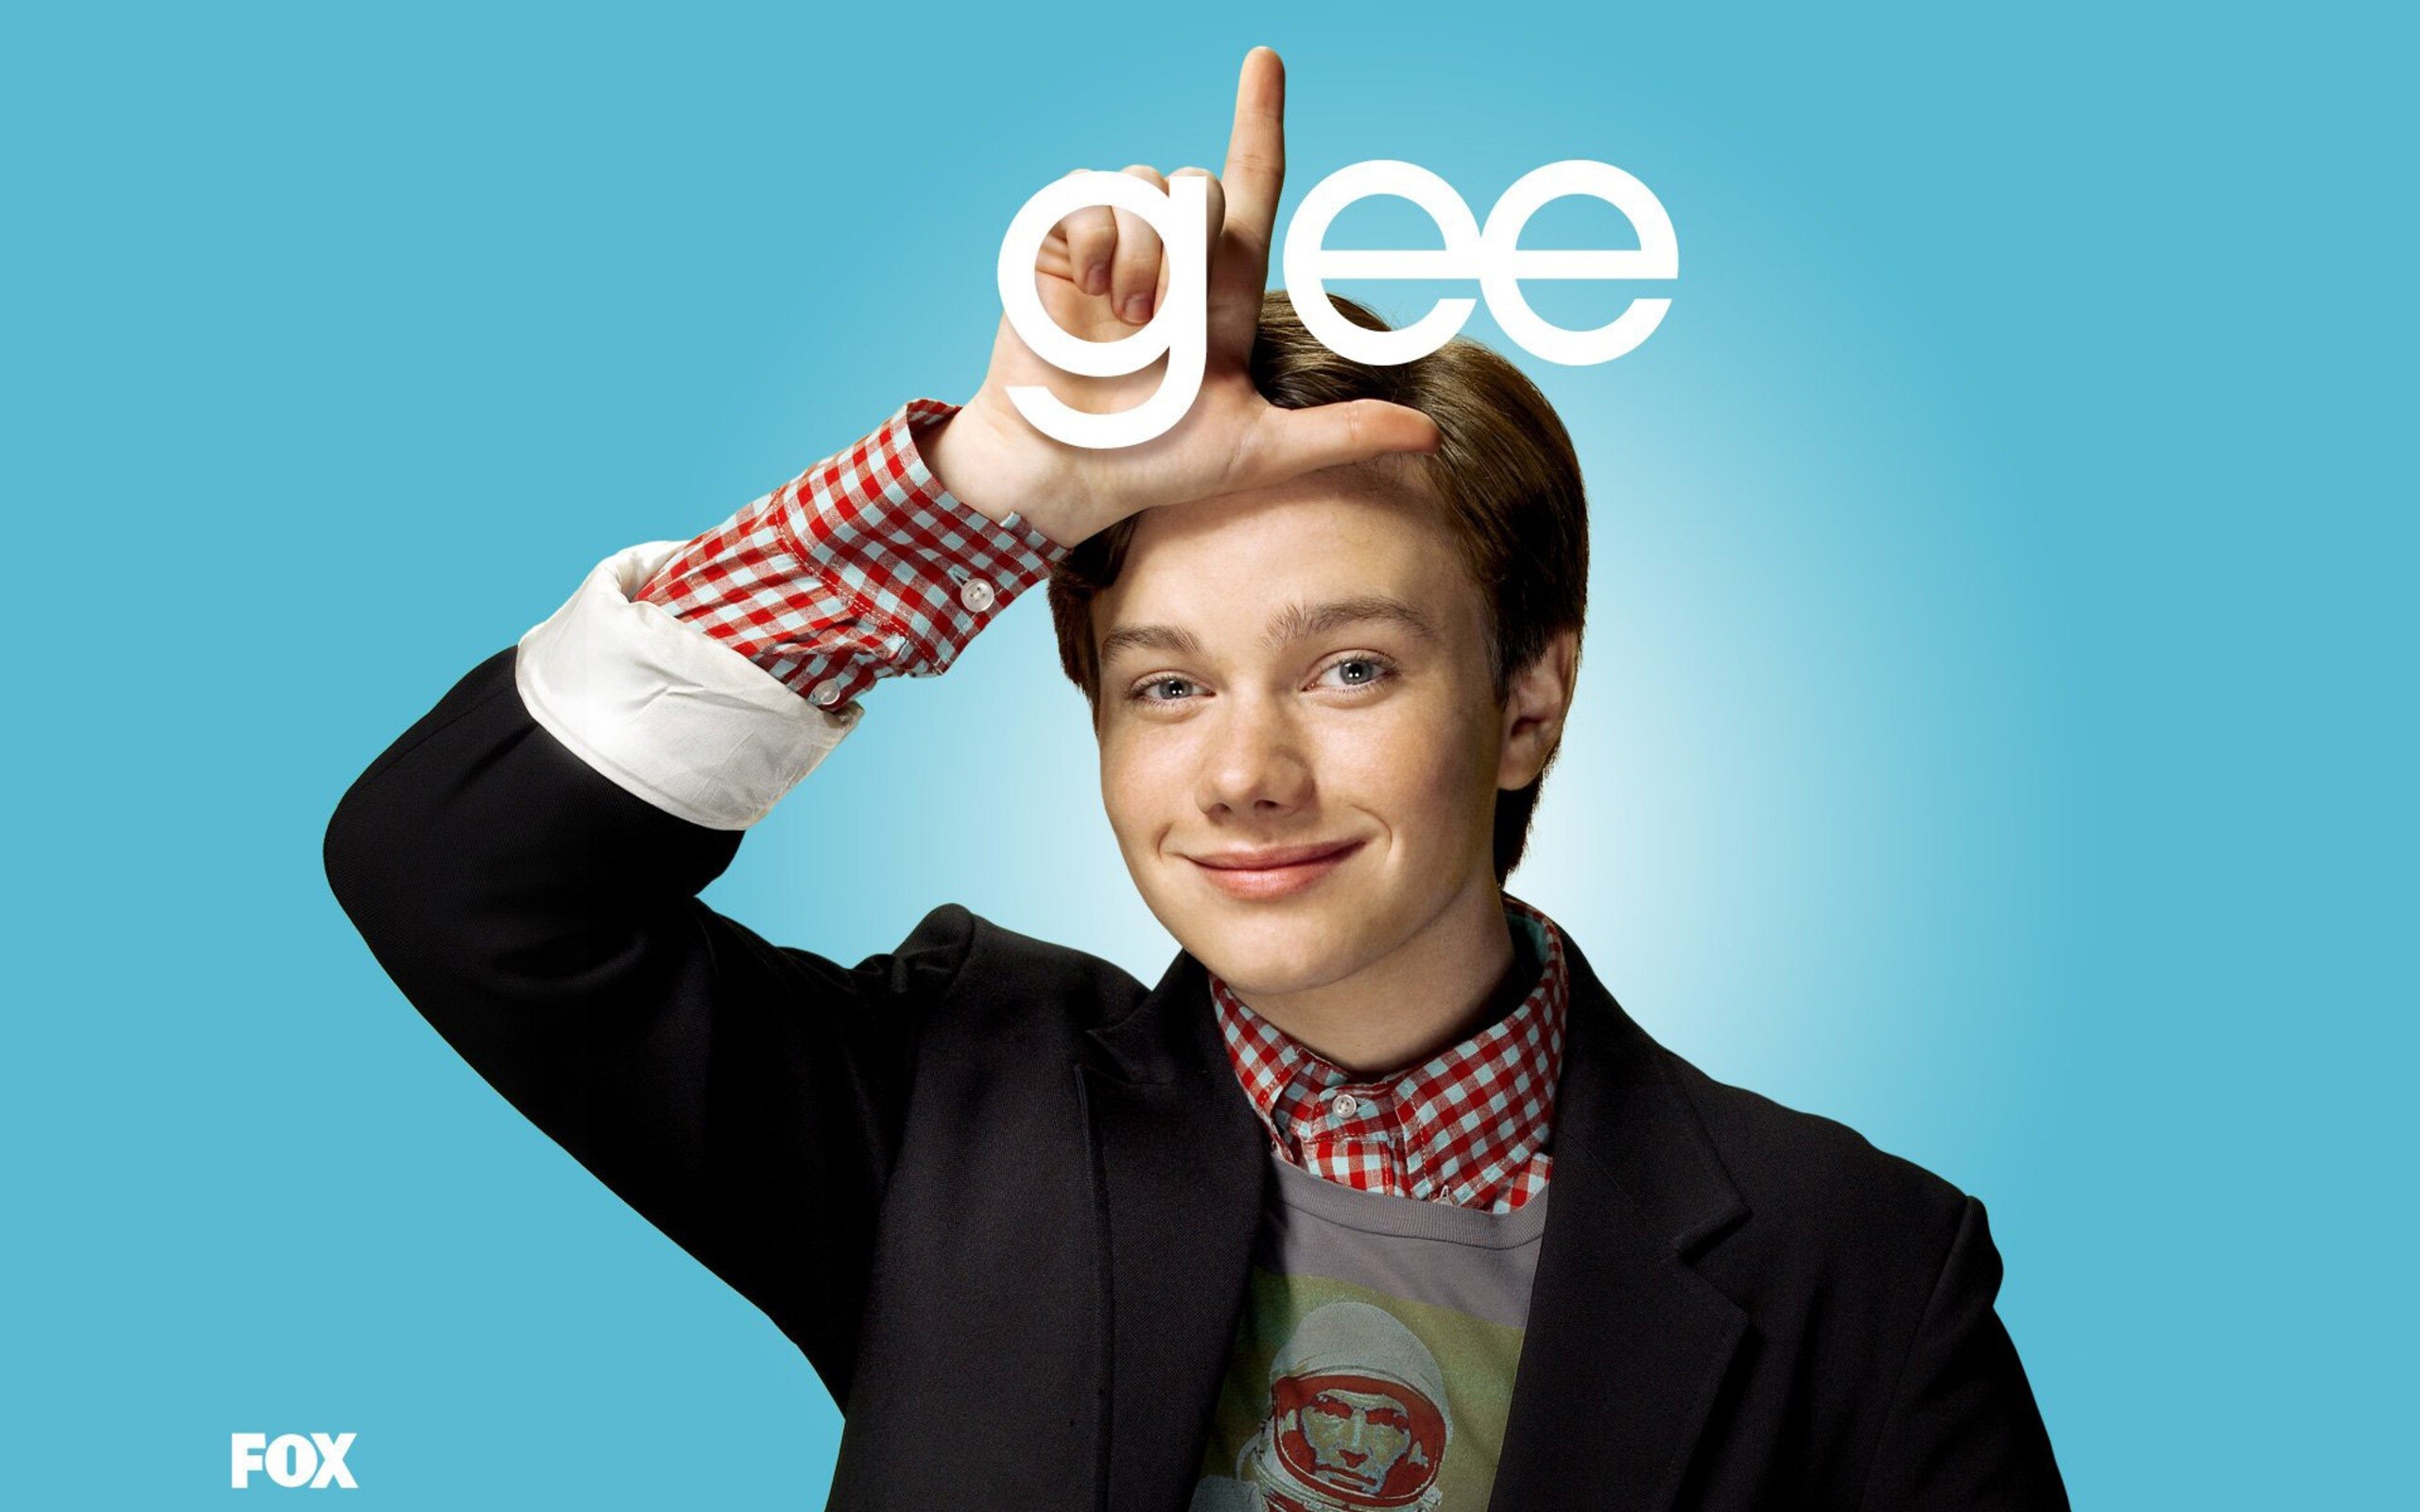 Glee (TV series): Kurt Hummel, A male character that has romantic feelings for Finn Hudson. 2560x1600 HD Background.